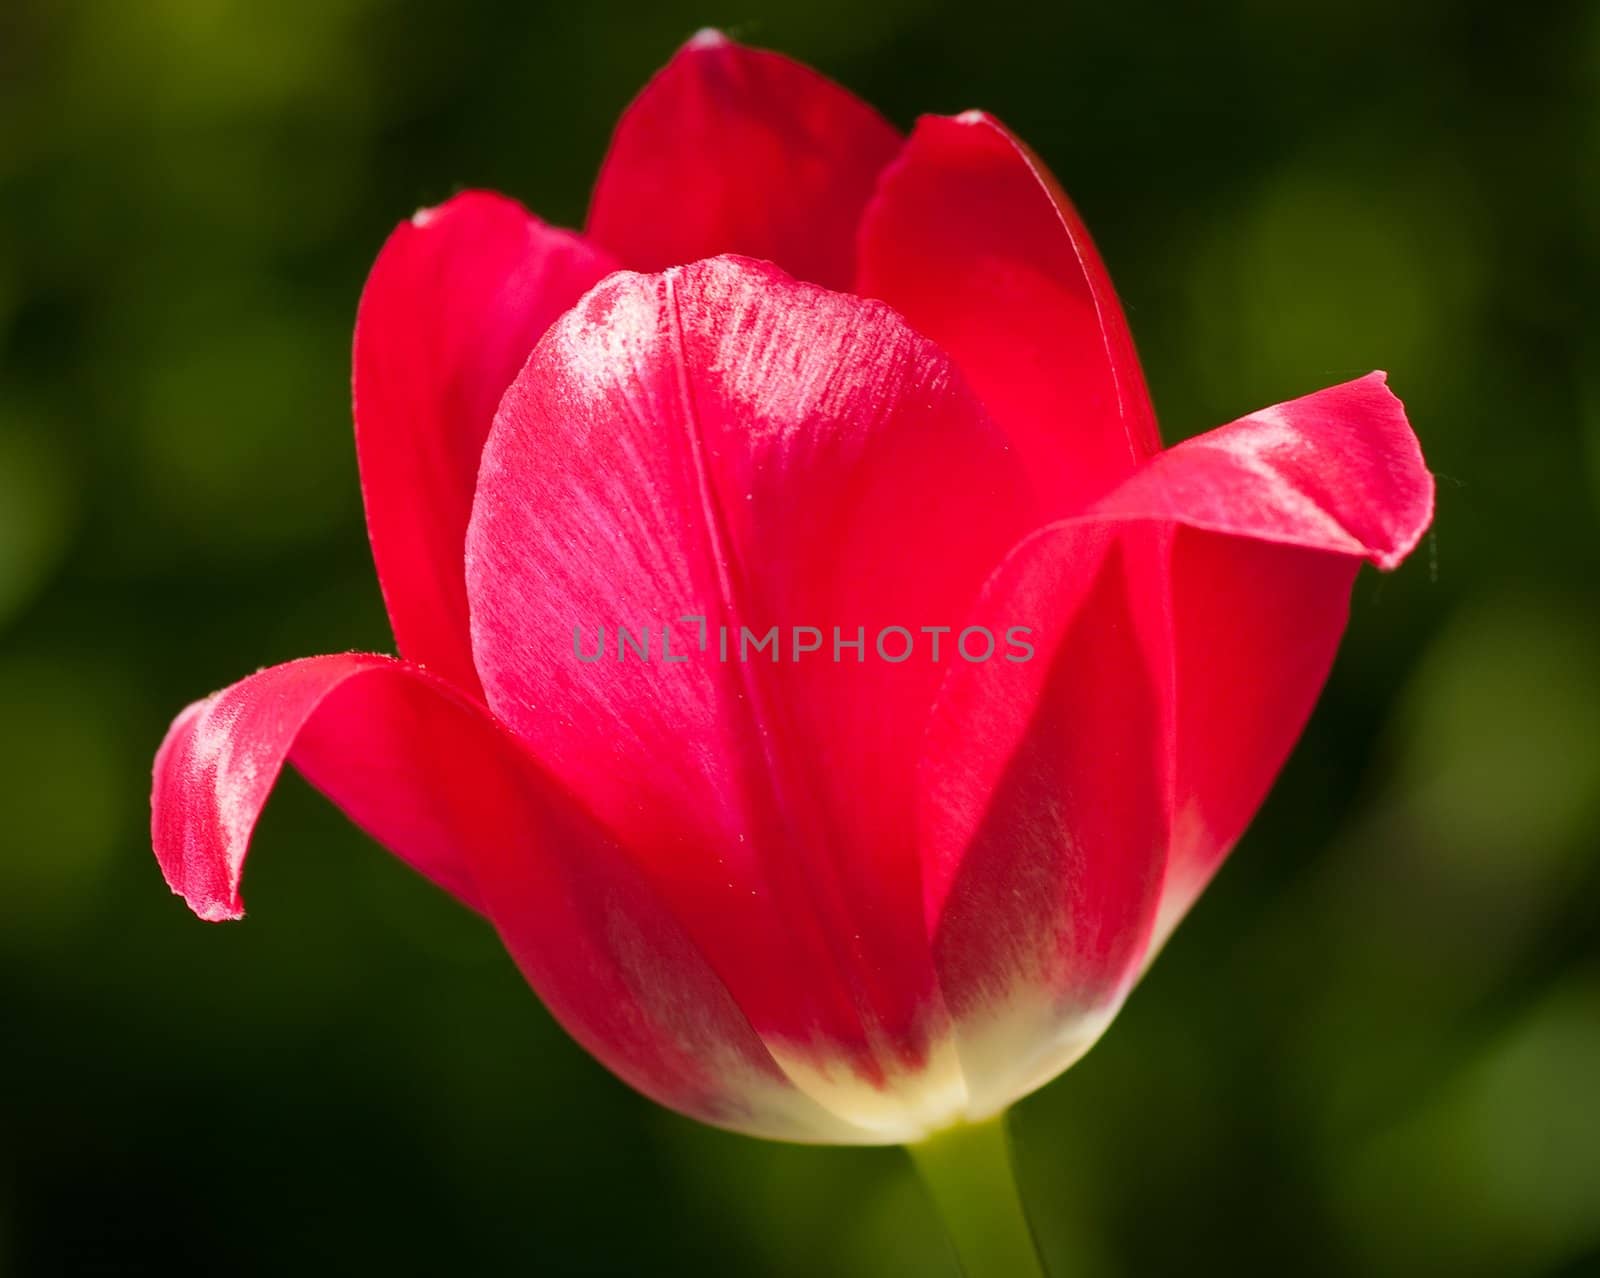 Red tulip by nikolpetr